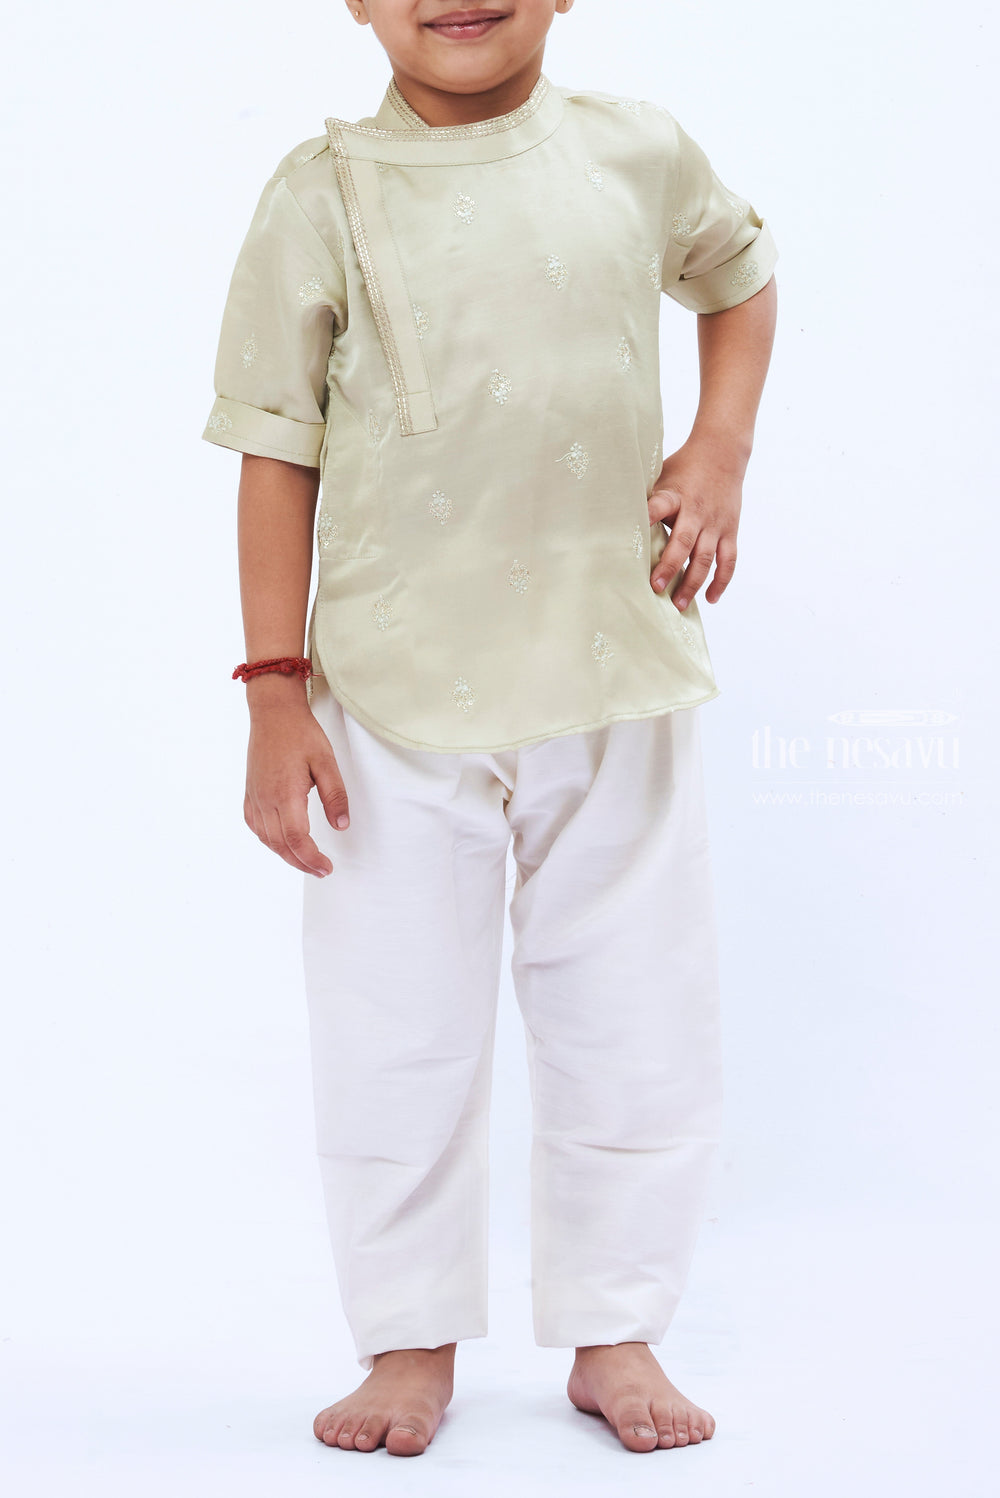 The Nesavu Boys Kurtha Shirt Boys Elegant Green Silk Kurta Shirt with Embellishment Nesavu Boys Silk Kurta | Luxurious Traditional Shirt for Special Occasions